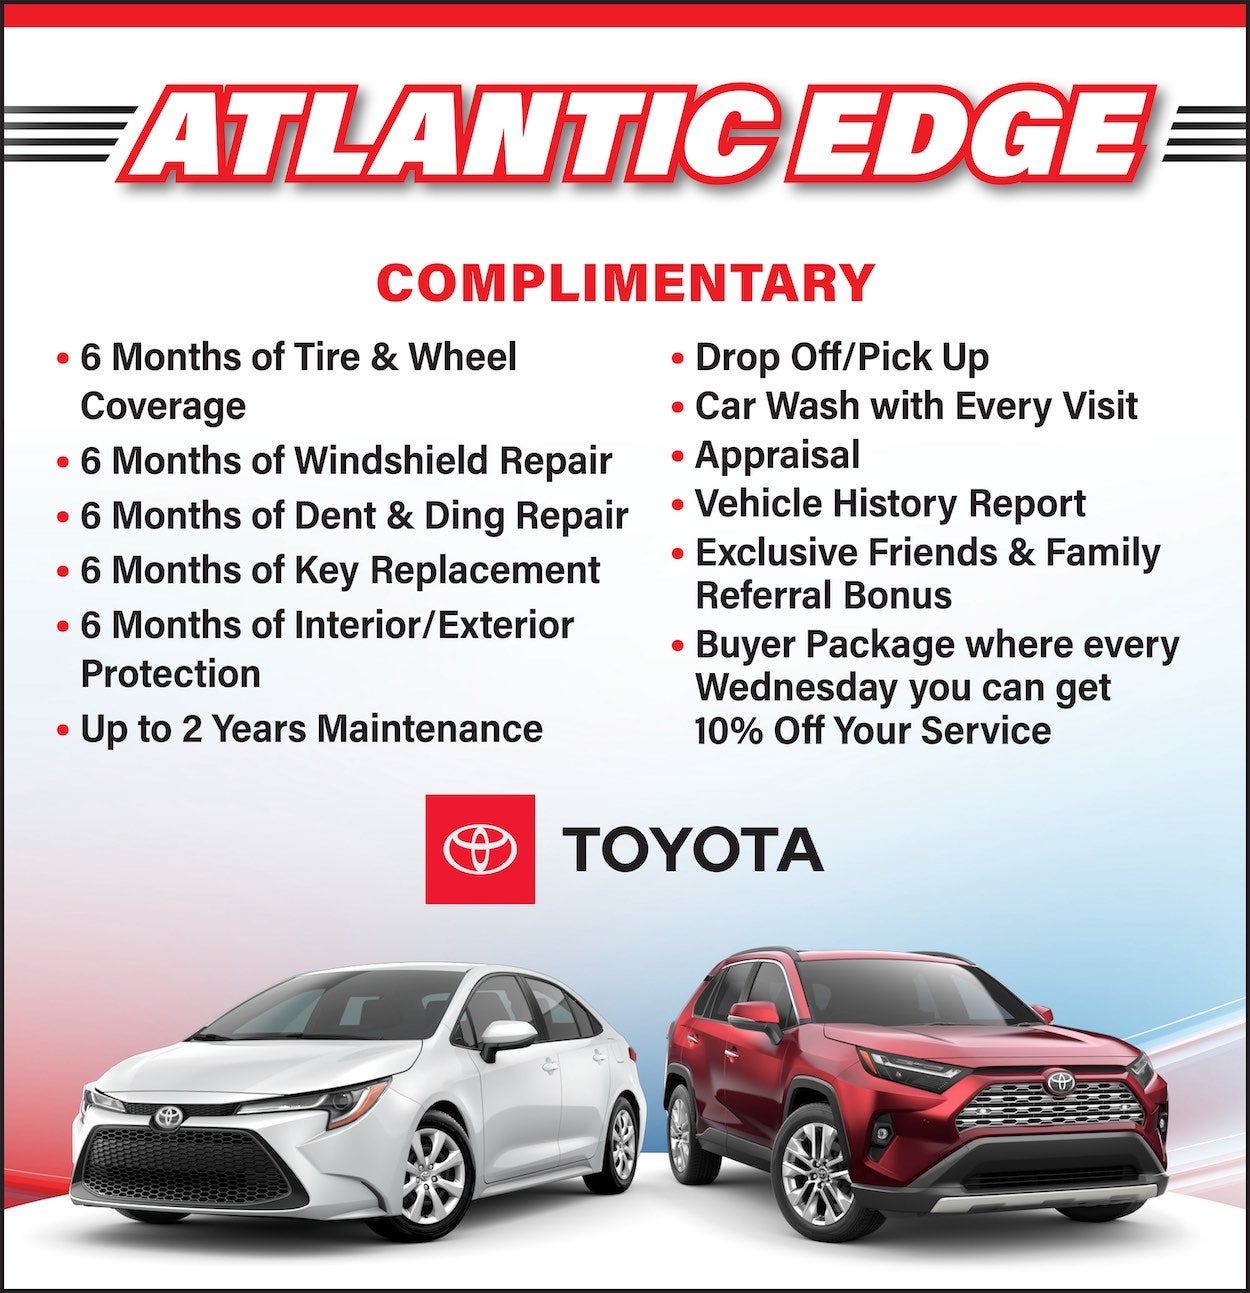 Why Buy From Atlantic Toyota in Woodbridge, VA